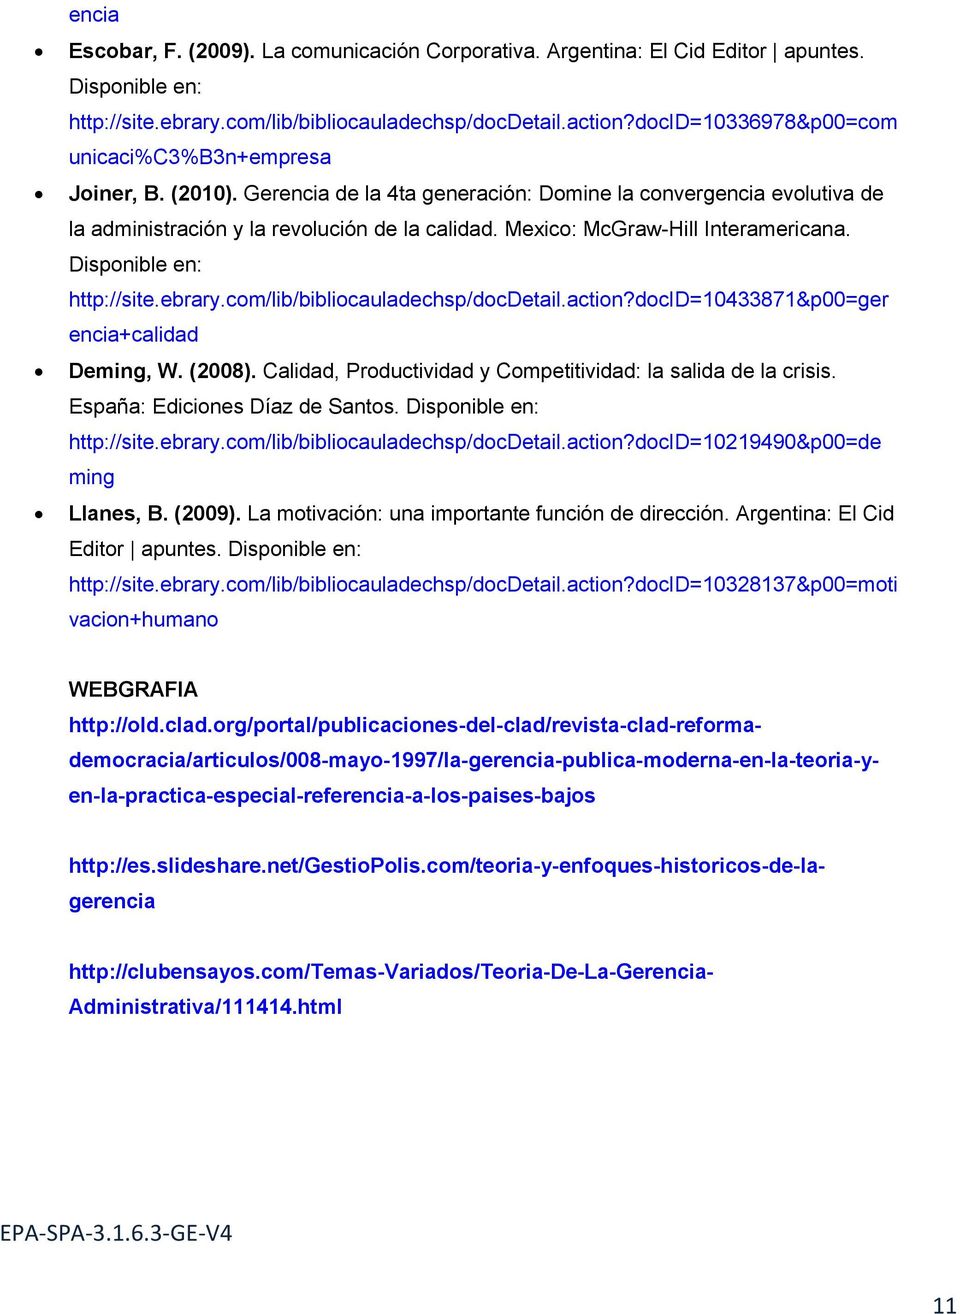 Mexico: McGraw-Hill Interamericana. Disponible en: http://site.ebrary.com/lib/bibliocauladechsp/docdetail.action?docid=10433871&p00=ger encia+calidad Deming, W. (2008).